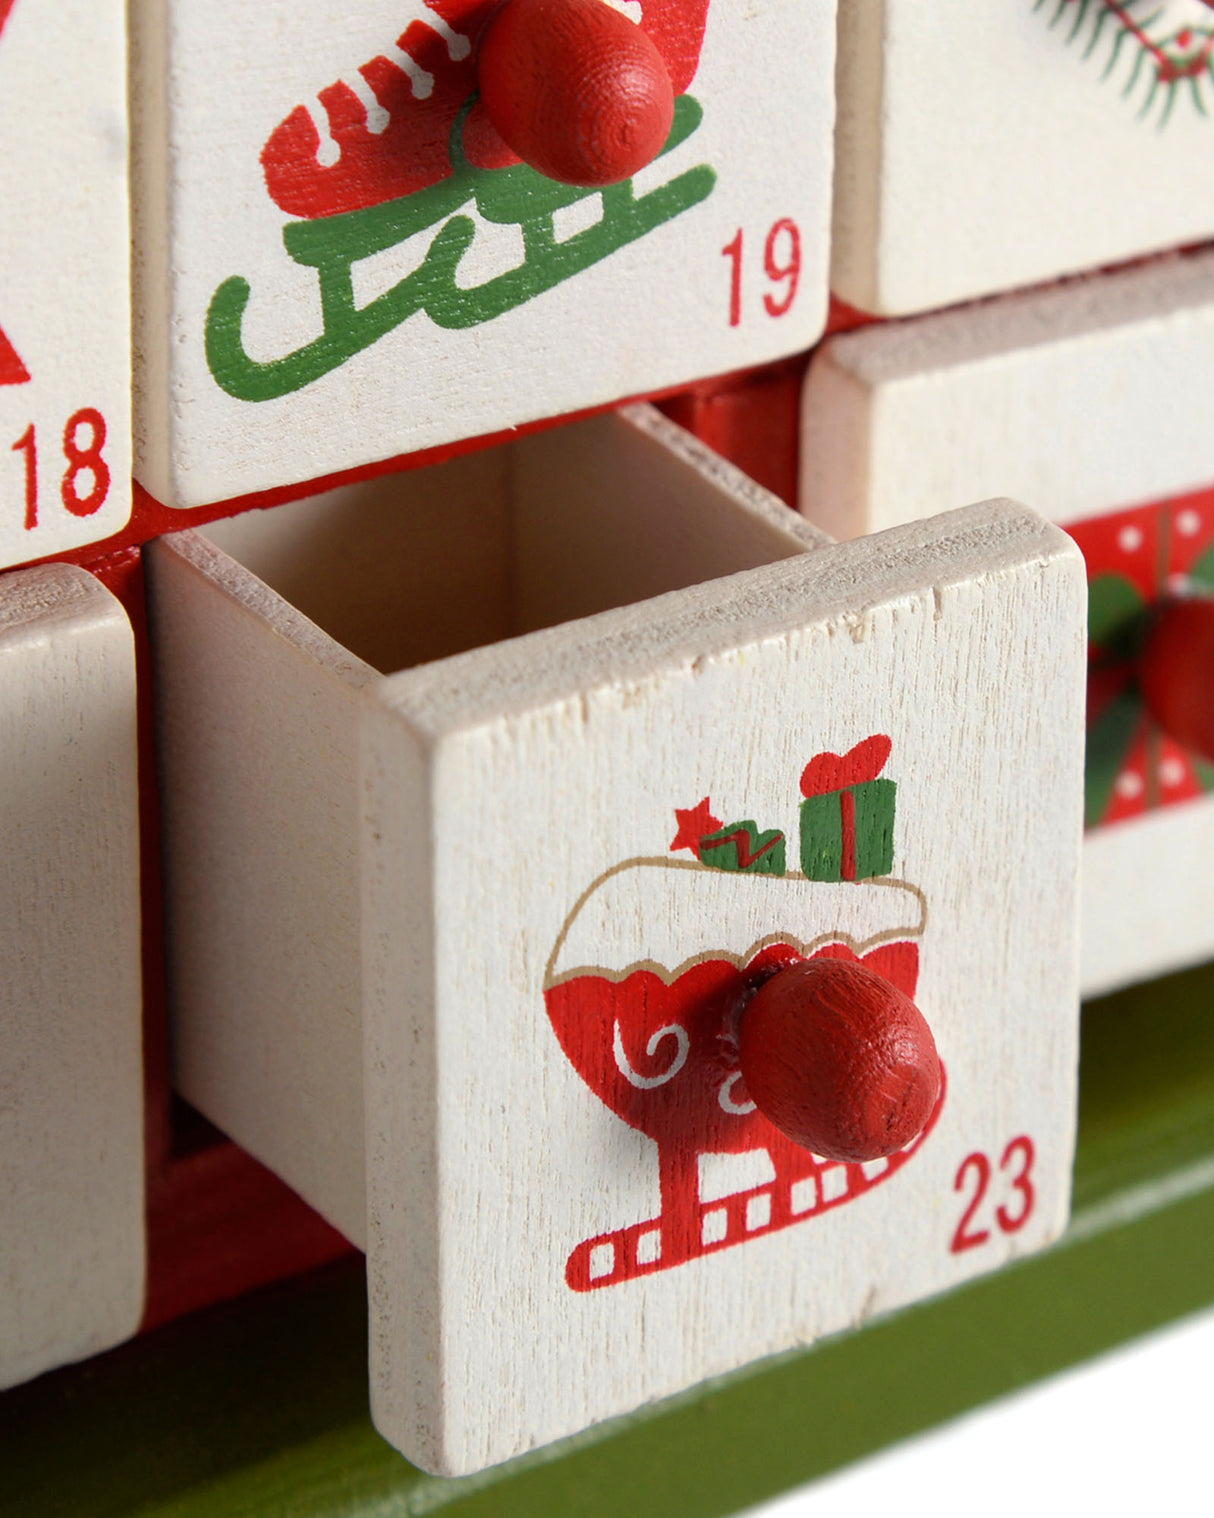 Wooden Christmas Tree Advent Calendar, 40 cm